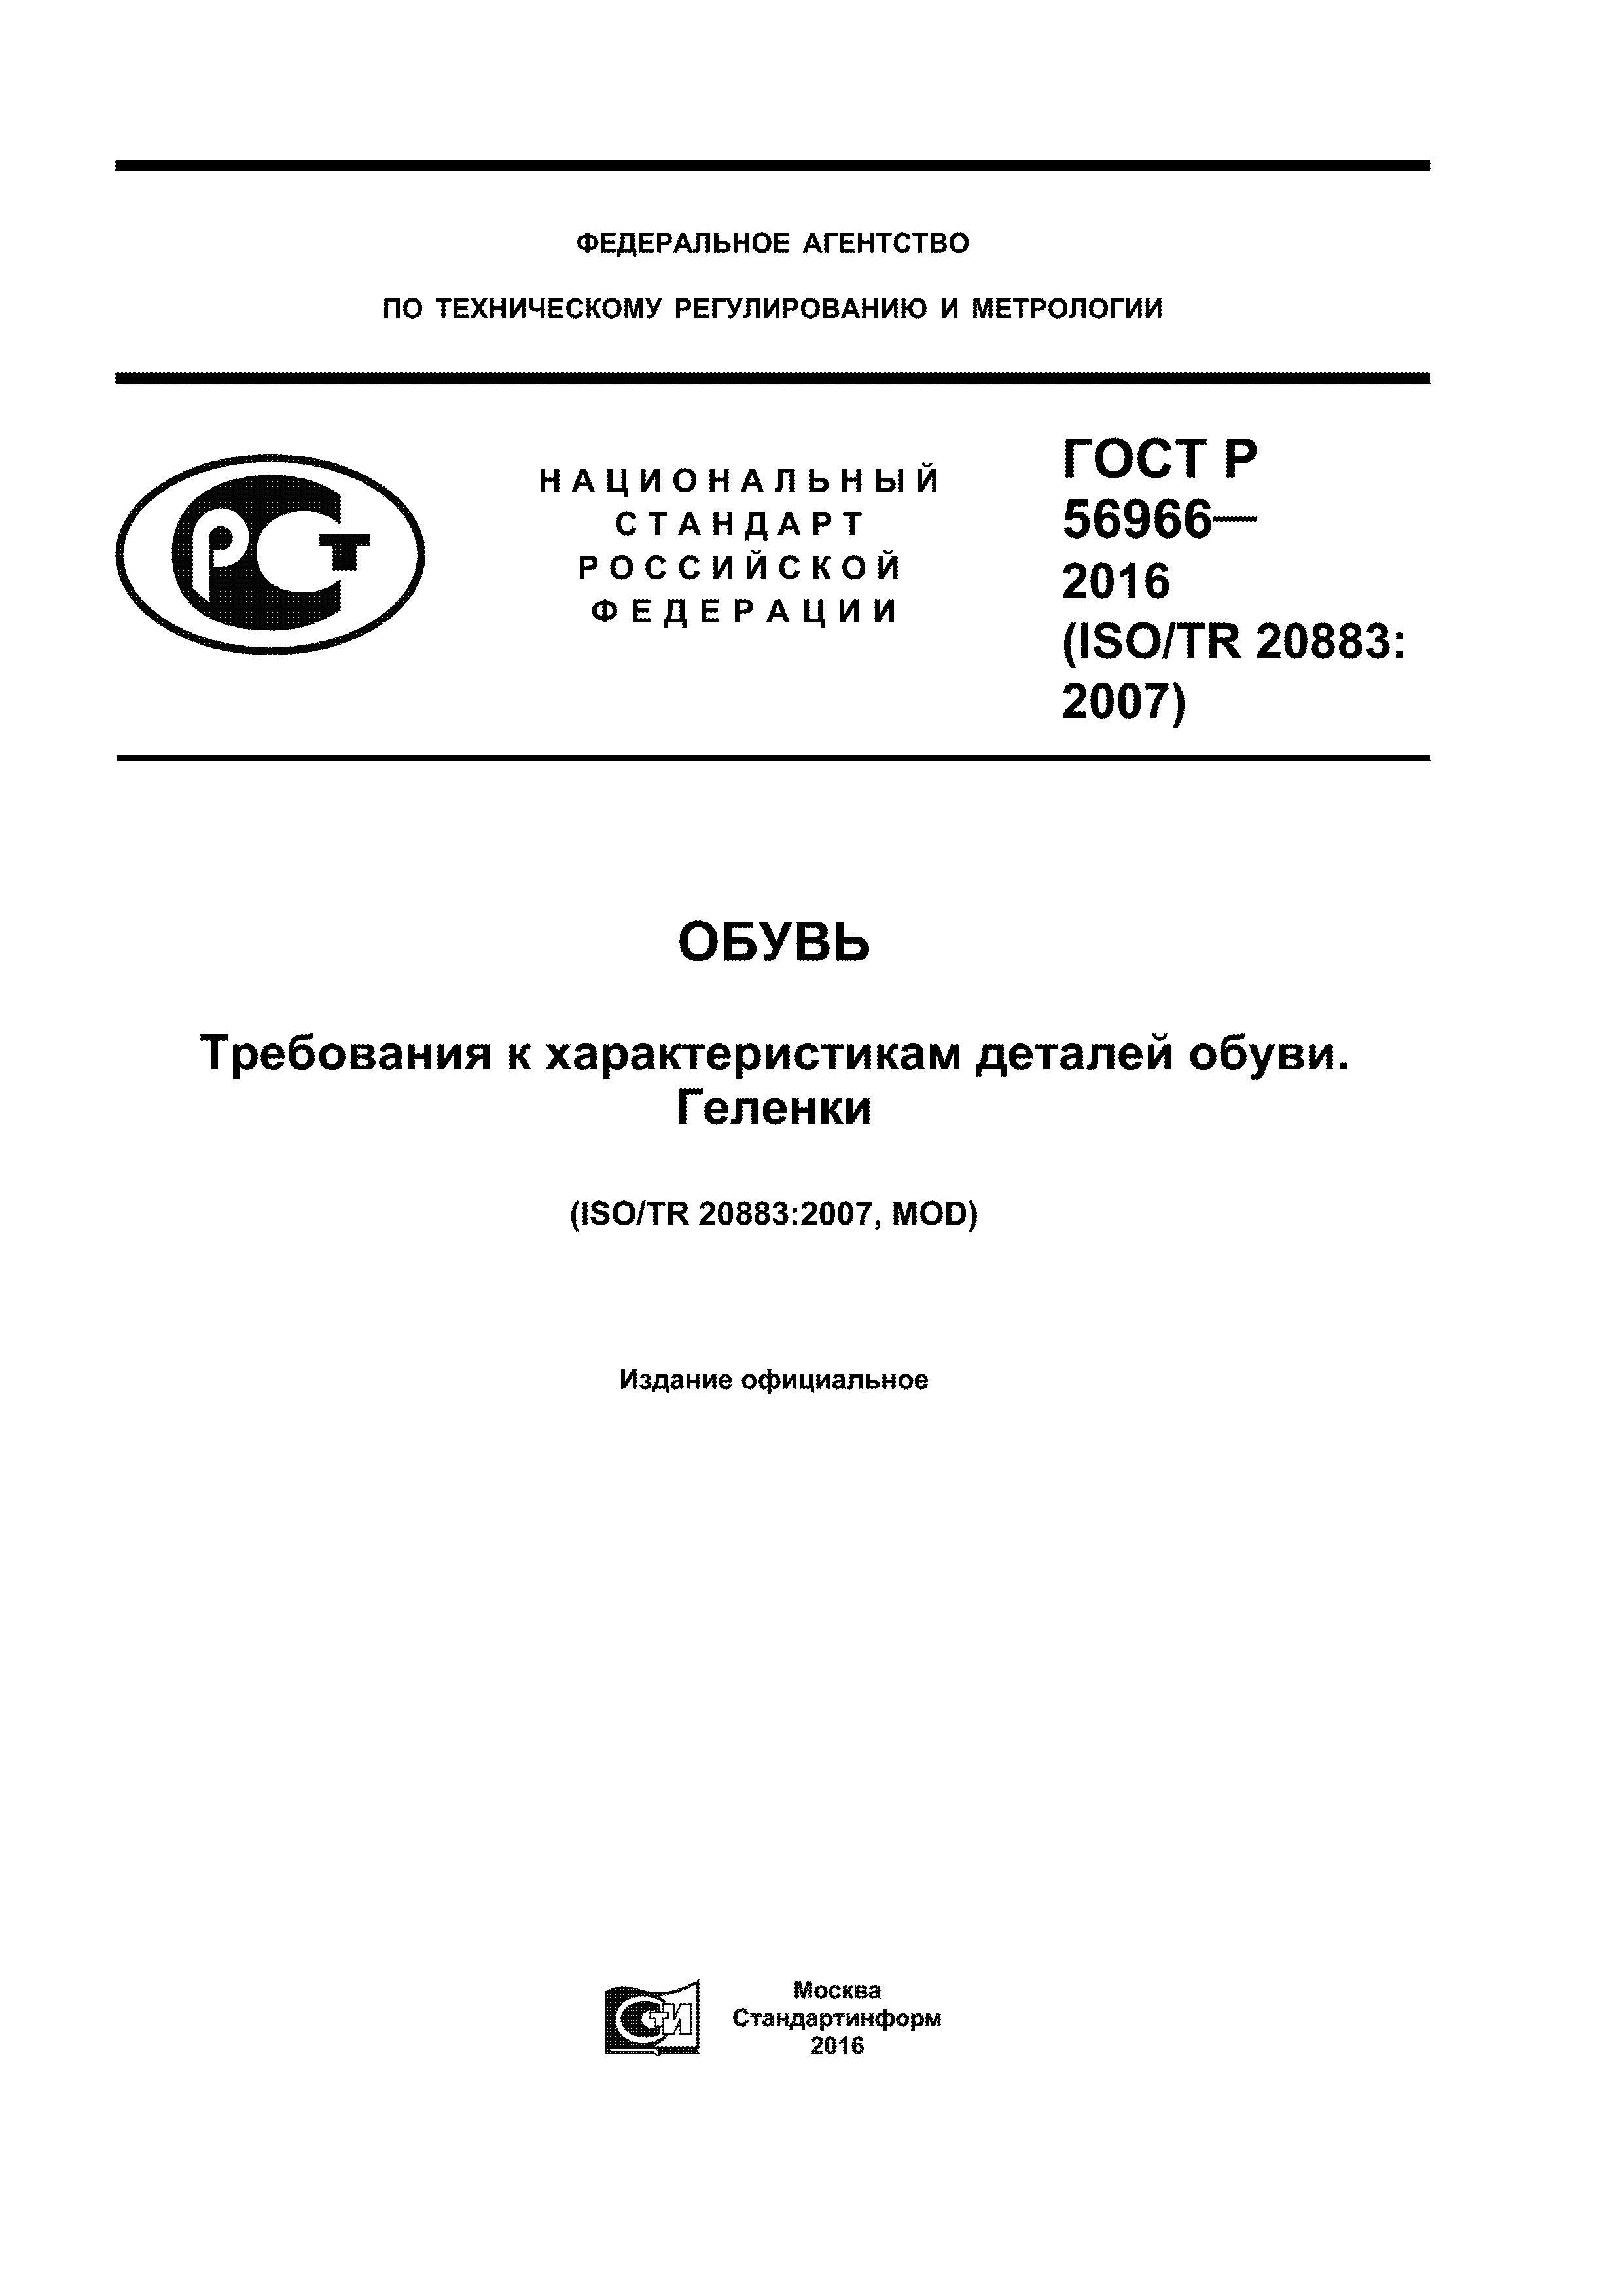 ГОСТ Р 56966-2016